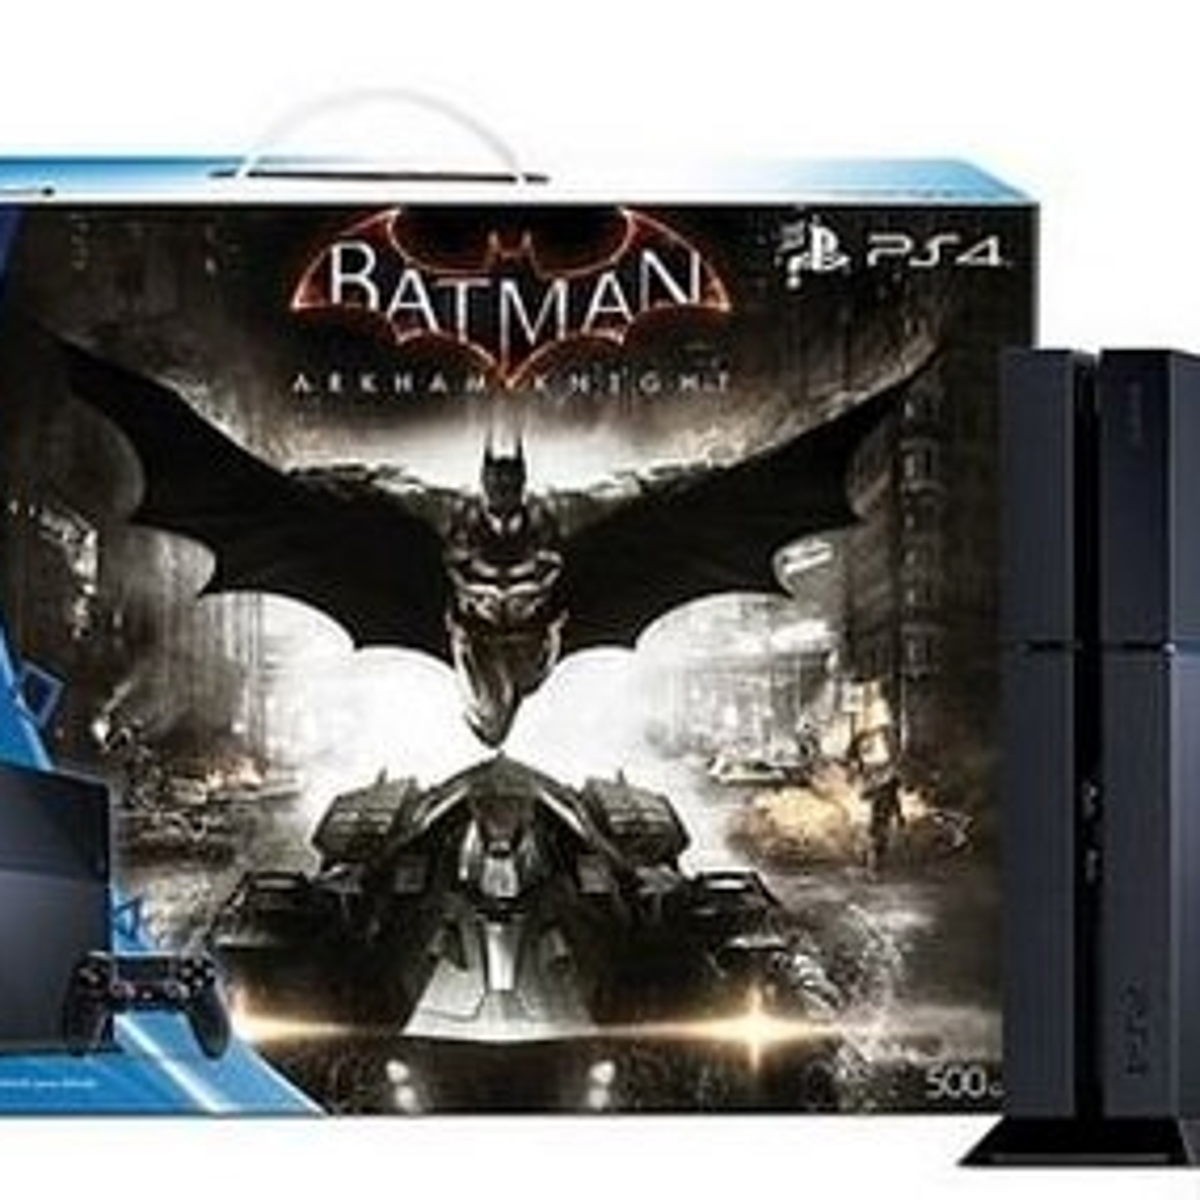 PS4, Batman lead 18% jump in US retail game sales - NPD